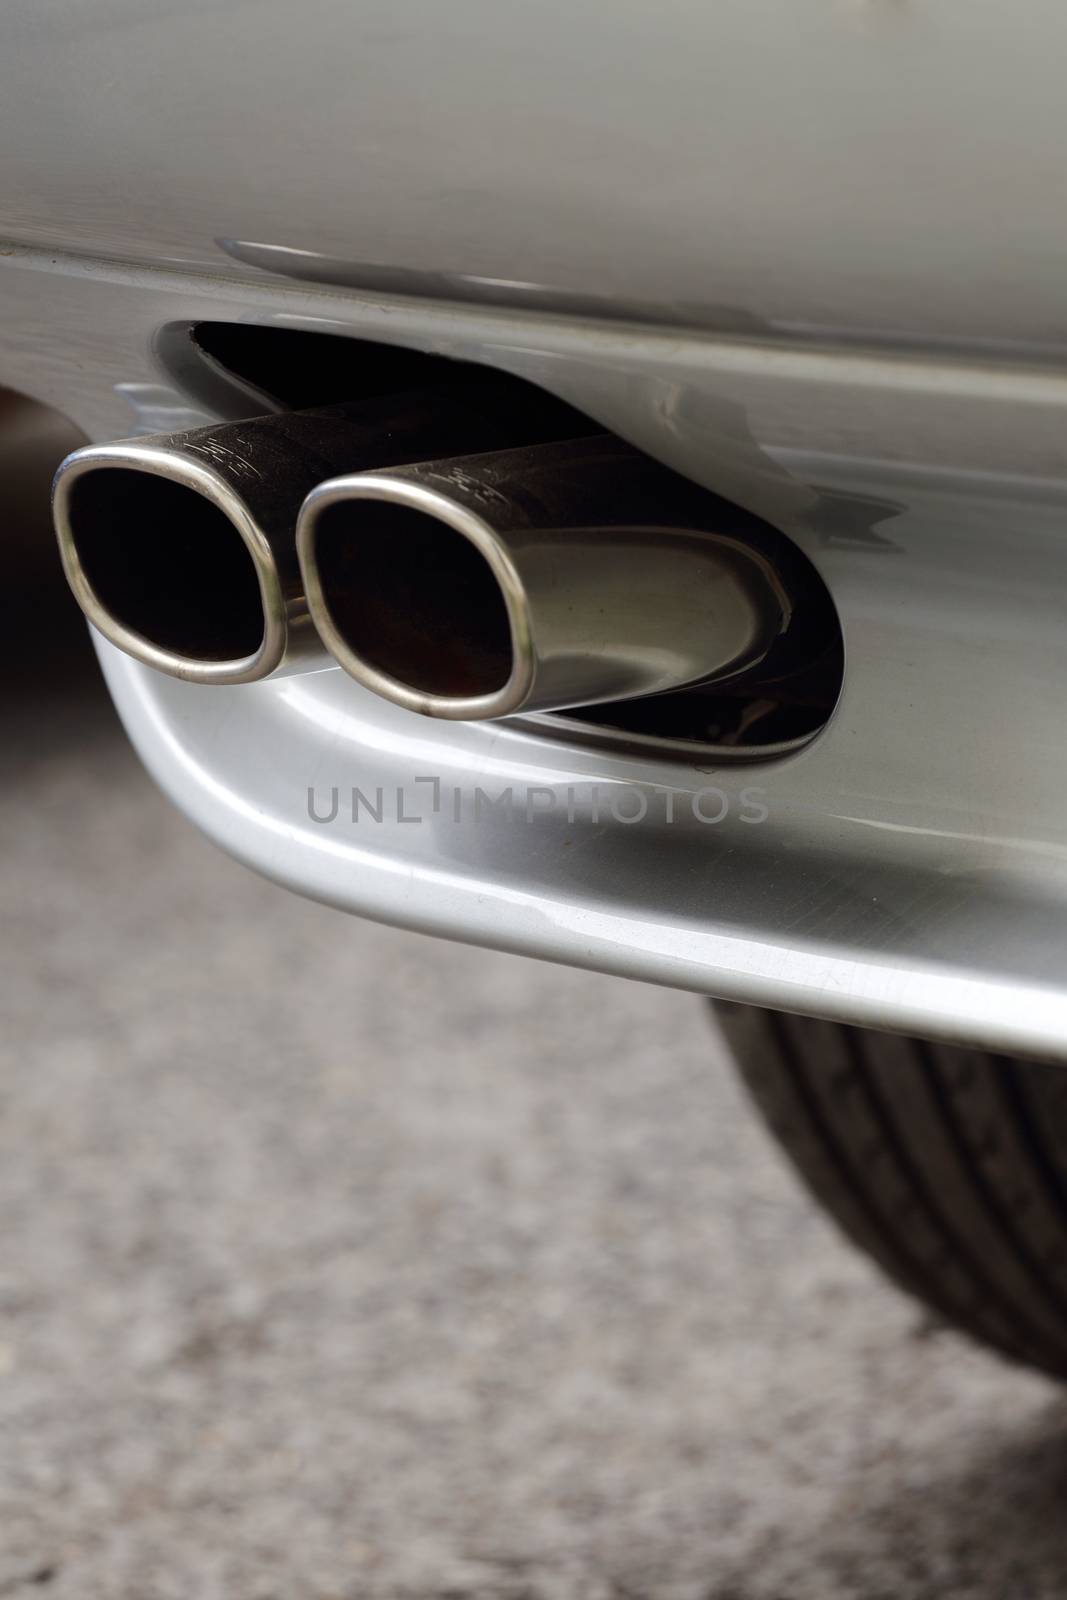 Sportscar twin polished chrome exhaust close up